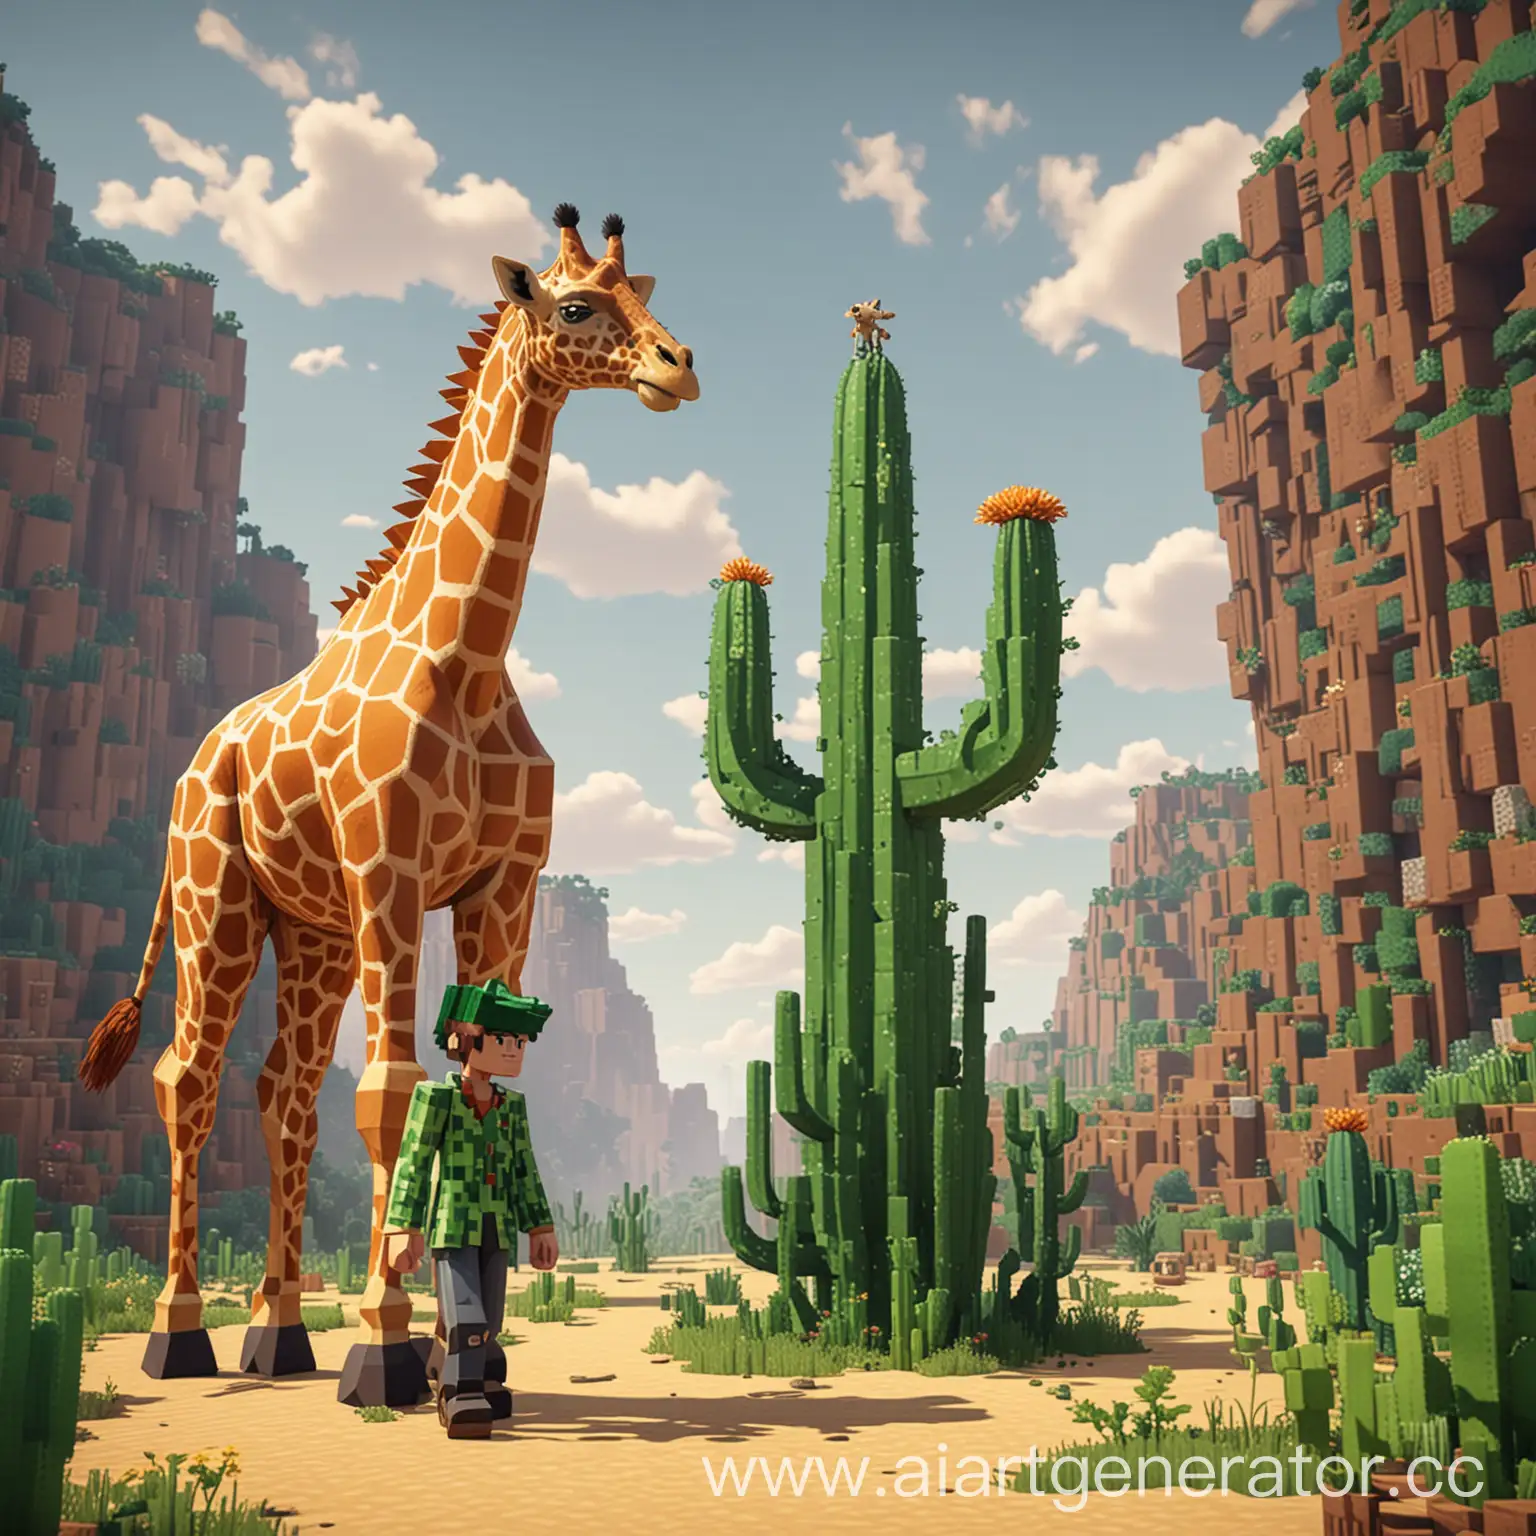 Minecraft-Cactus-Man-and-Giraffe-Man-Embrace-Anime-Style-8K-Art